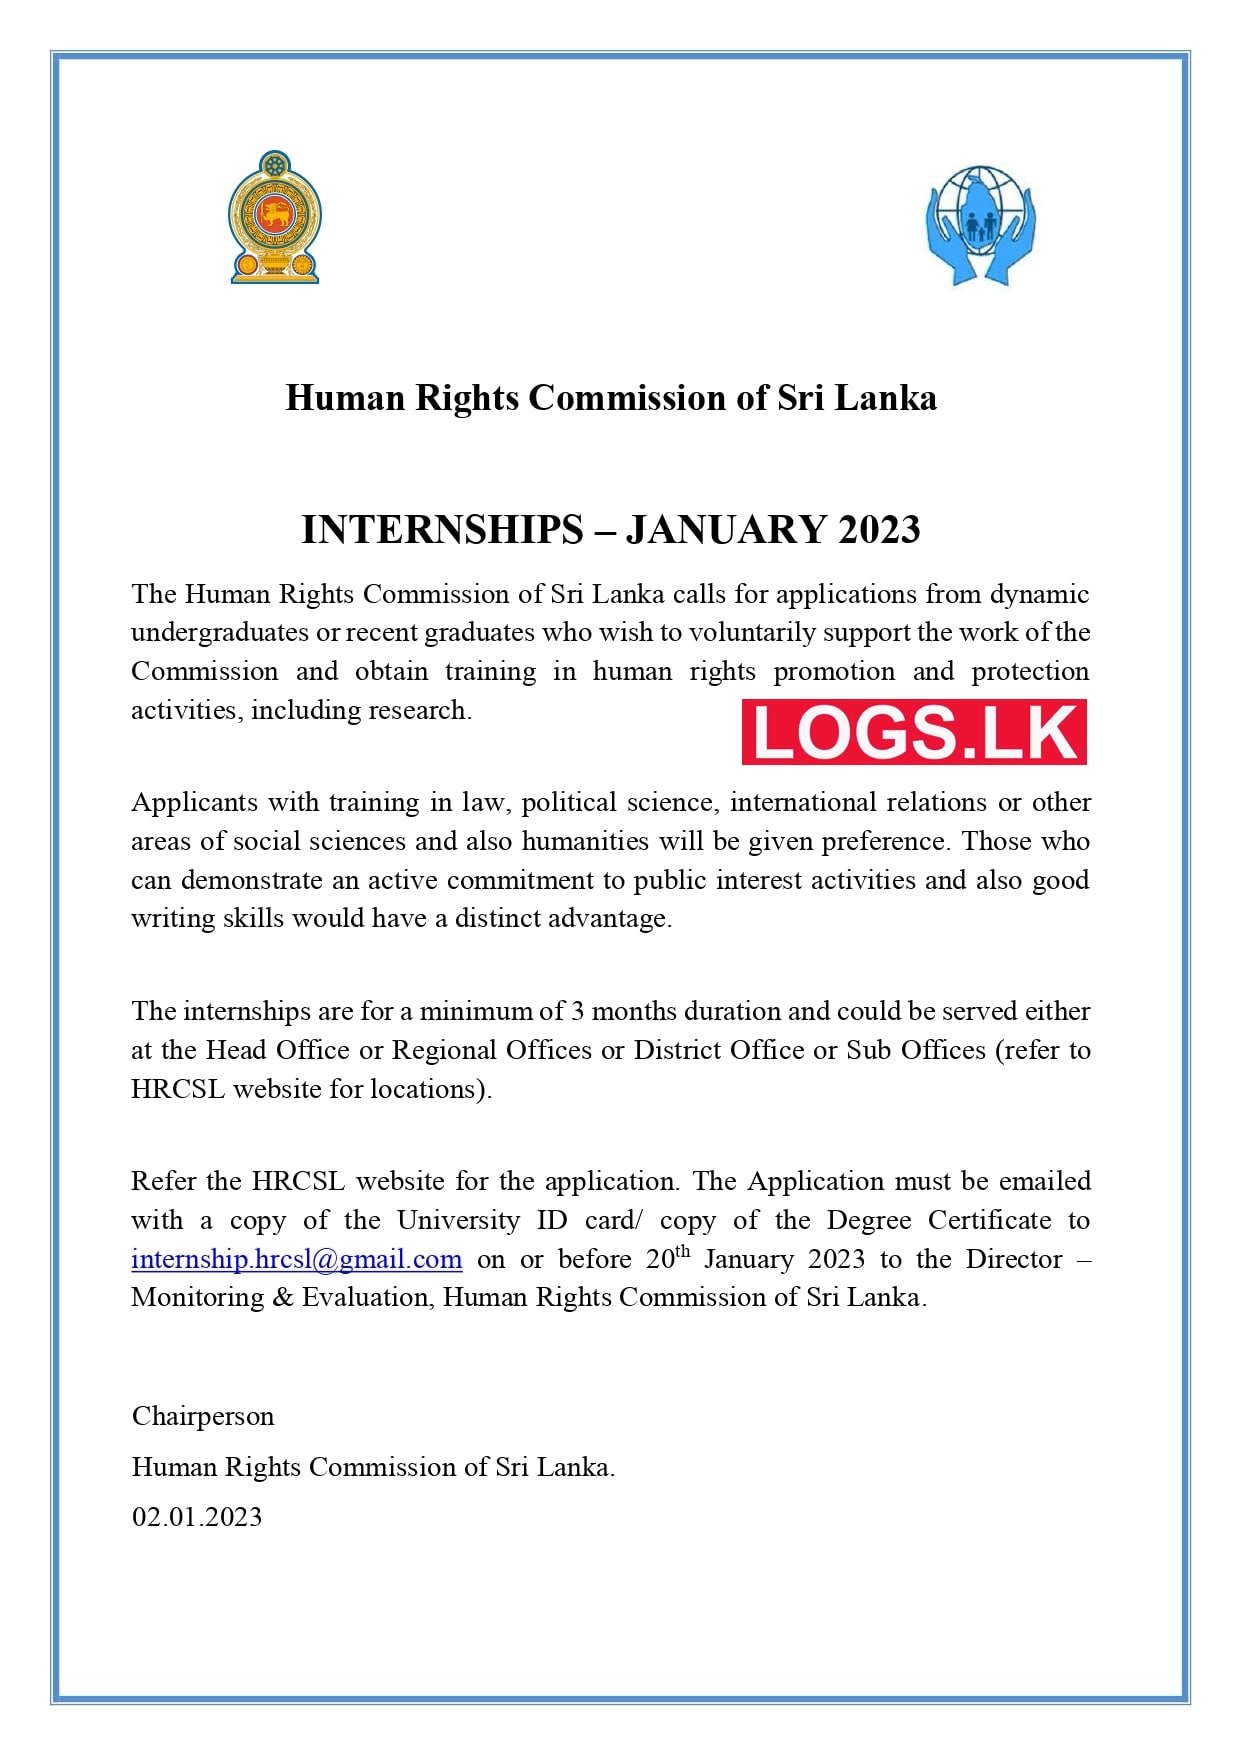 Human Rights Commission of Sri Lanka Internships 2023 Application Form, Details Download